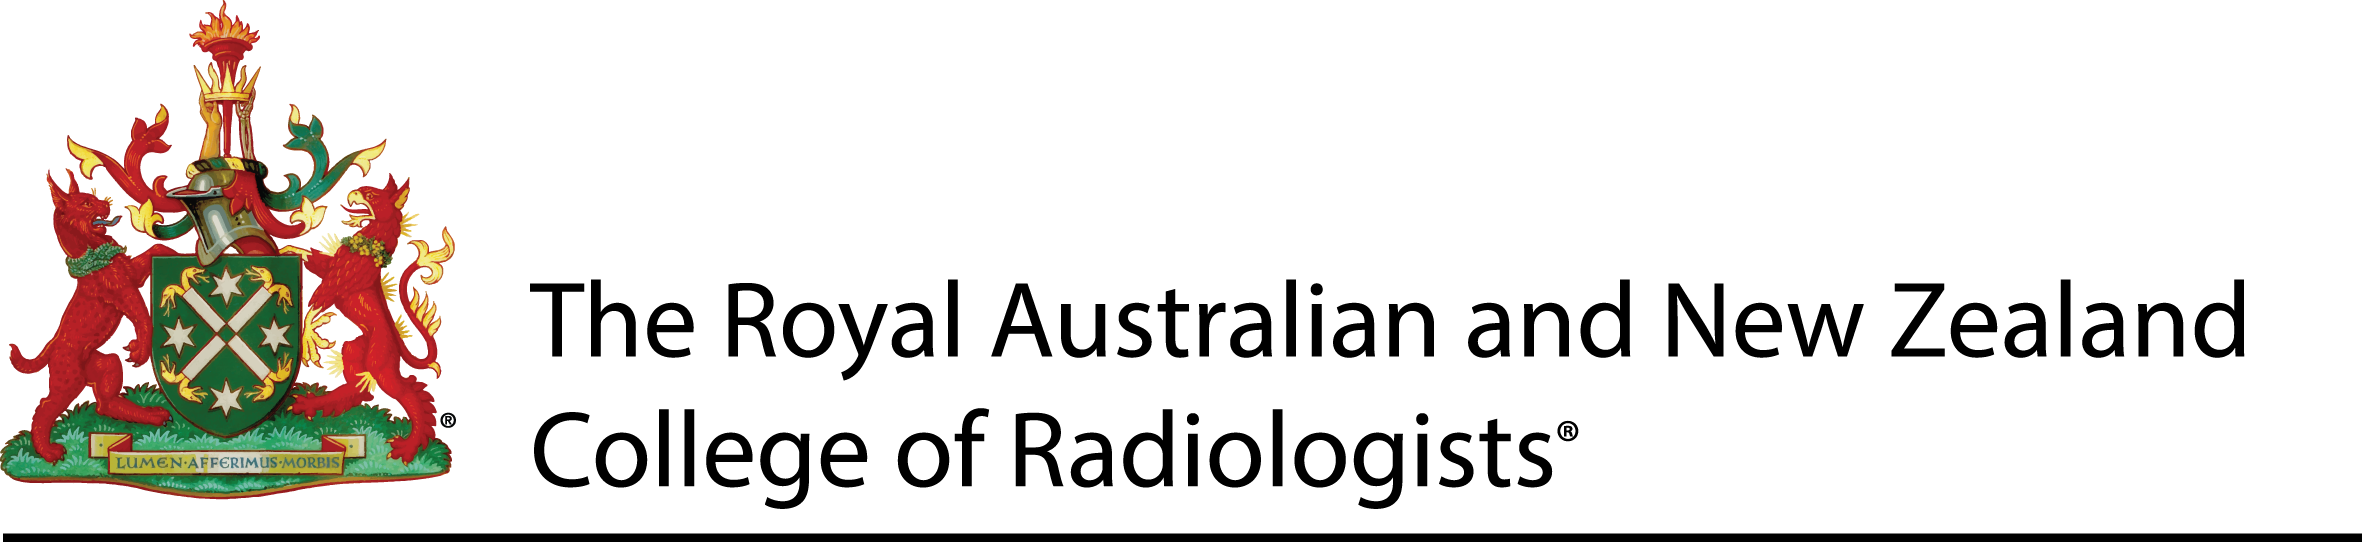 The Ranzcr logo